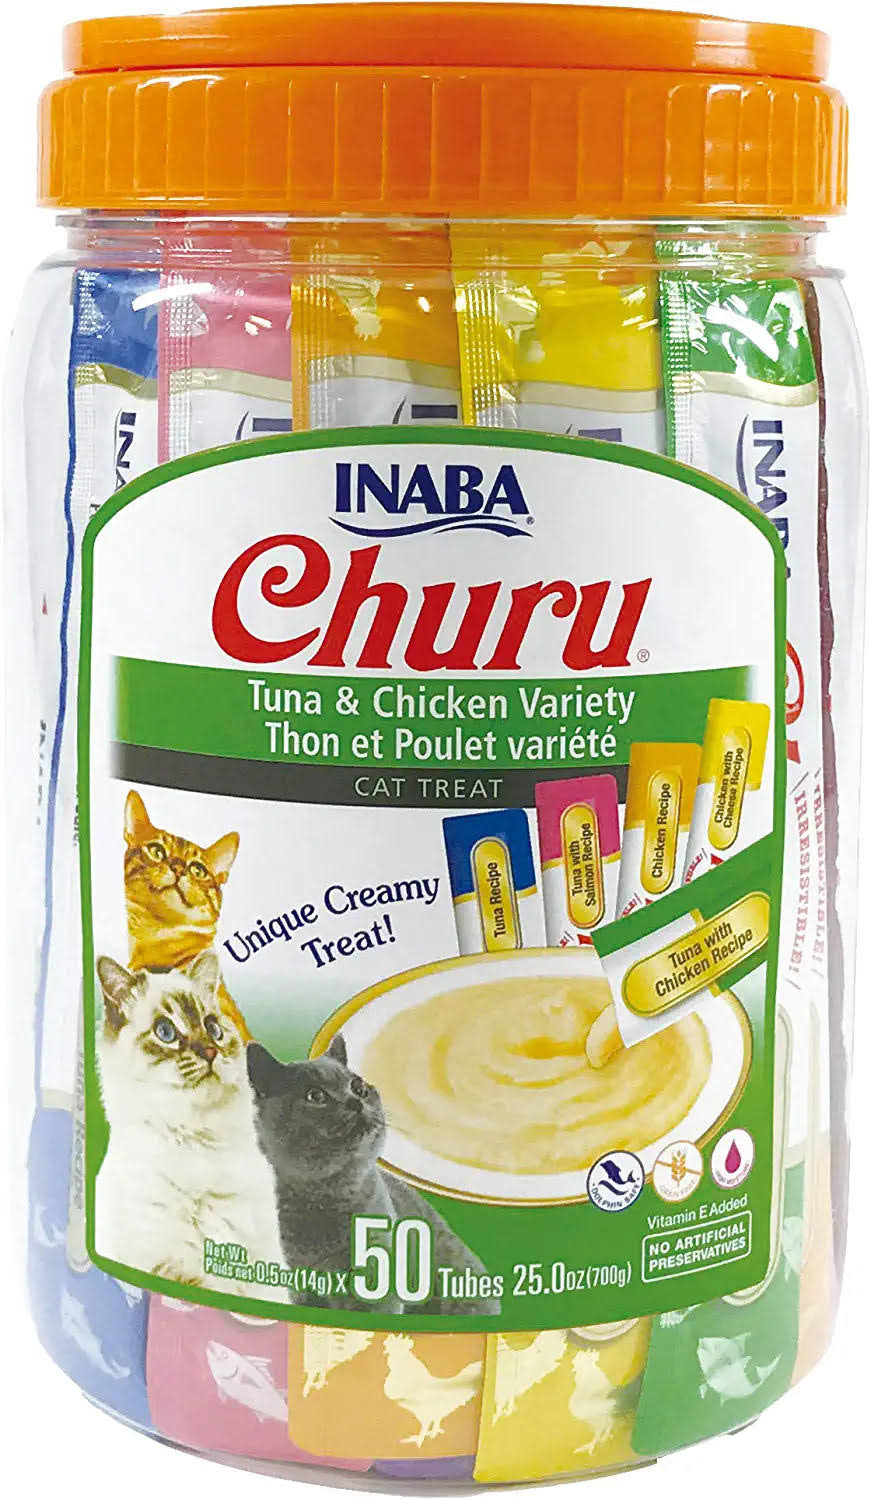 Inaba Churu Puree Tuna & Chicken Varieties Cat Treats 50 Tubes